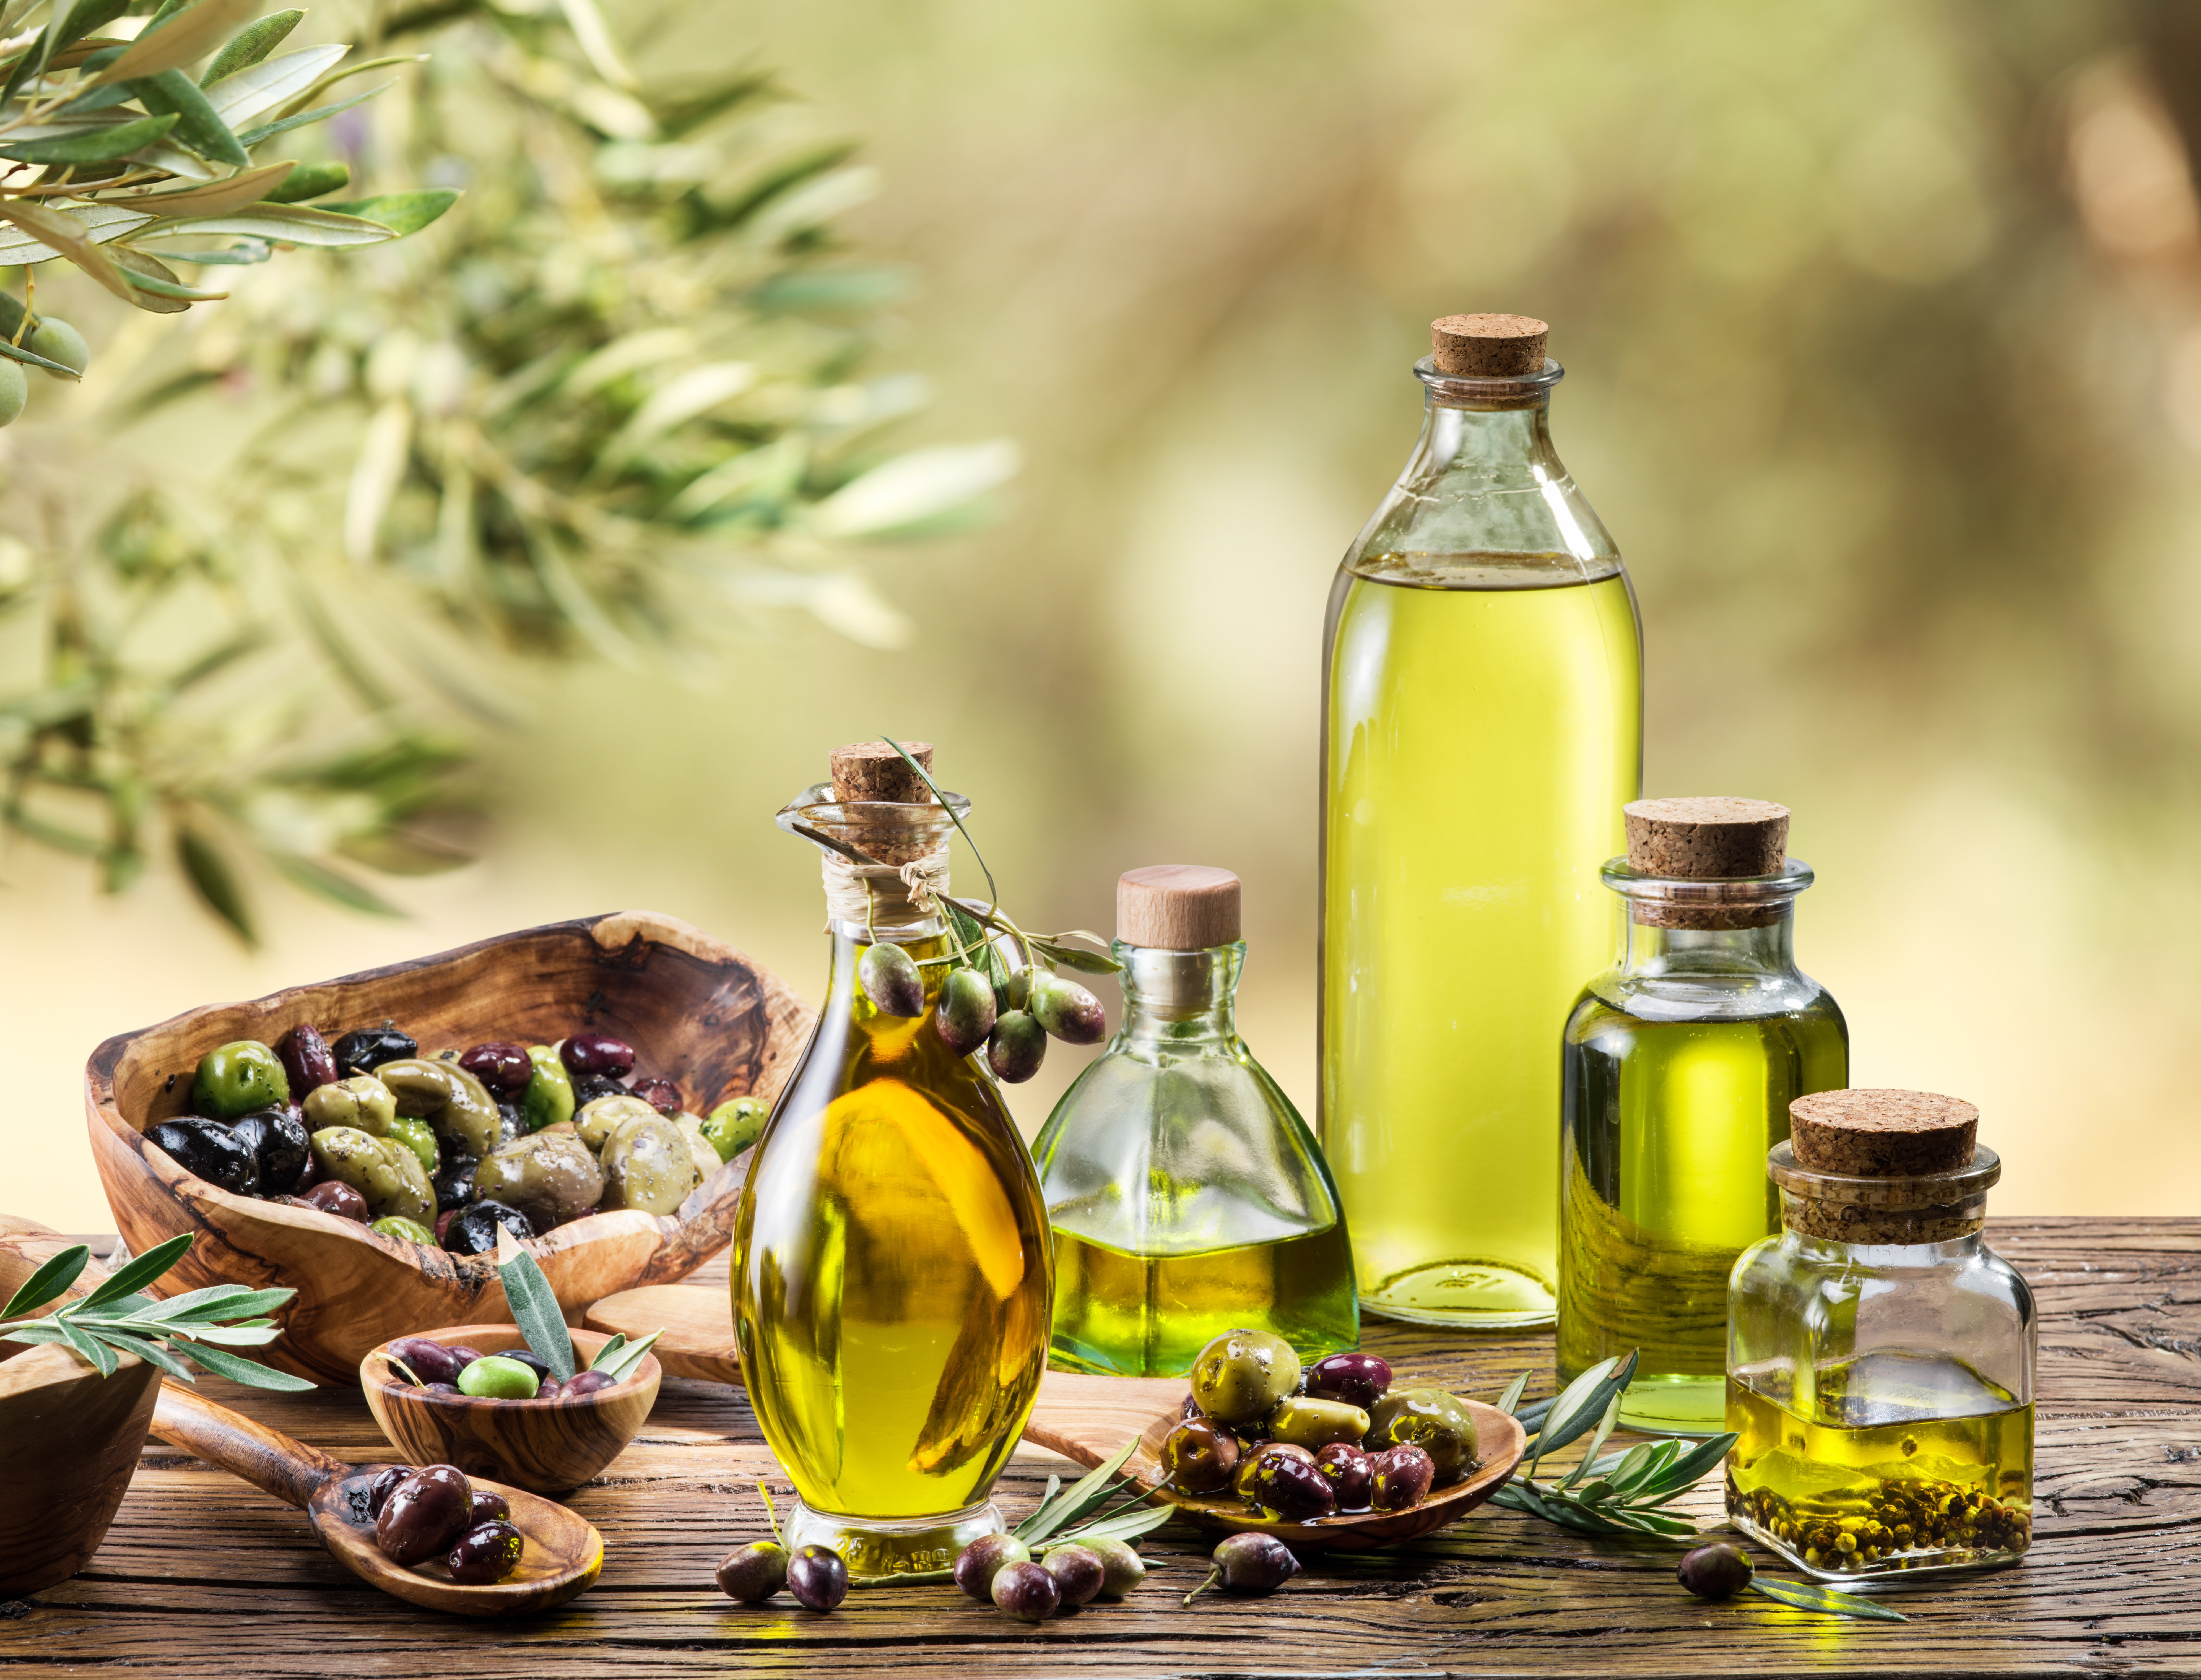 Mana yang Lebih Sehat: Minyak Zaitun Biasa Atau Extra Virgin Olive Oil?